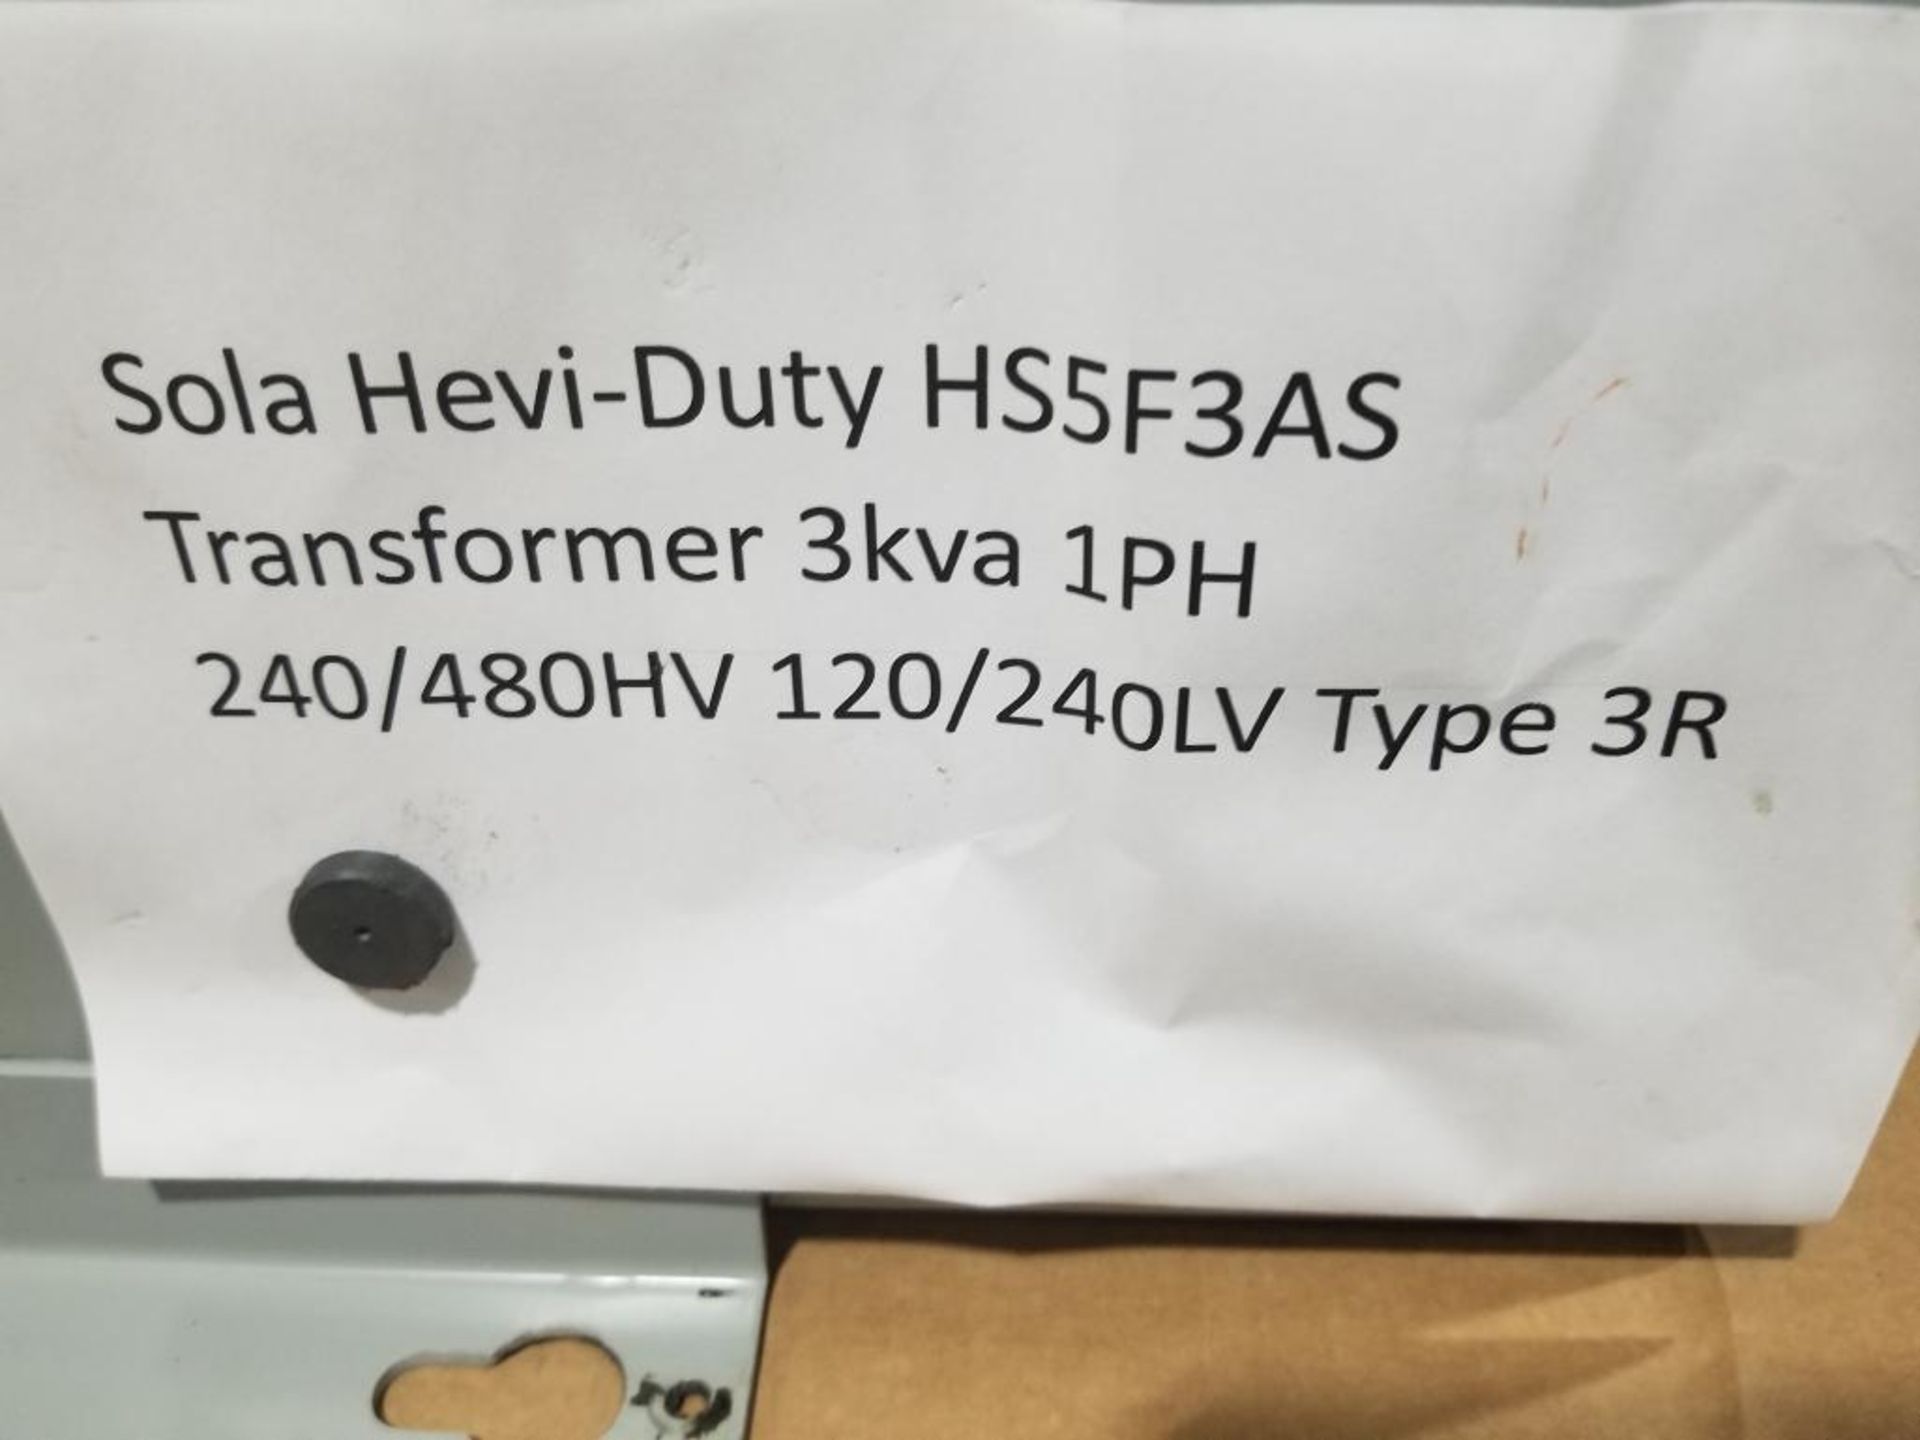 3kVa Sola Hevi-Duty transformer. HSSF3AS. - Image 4 of 4